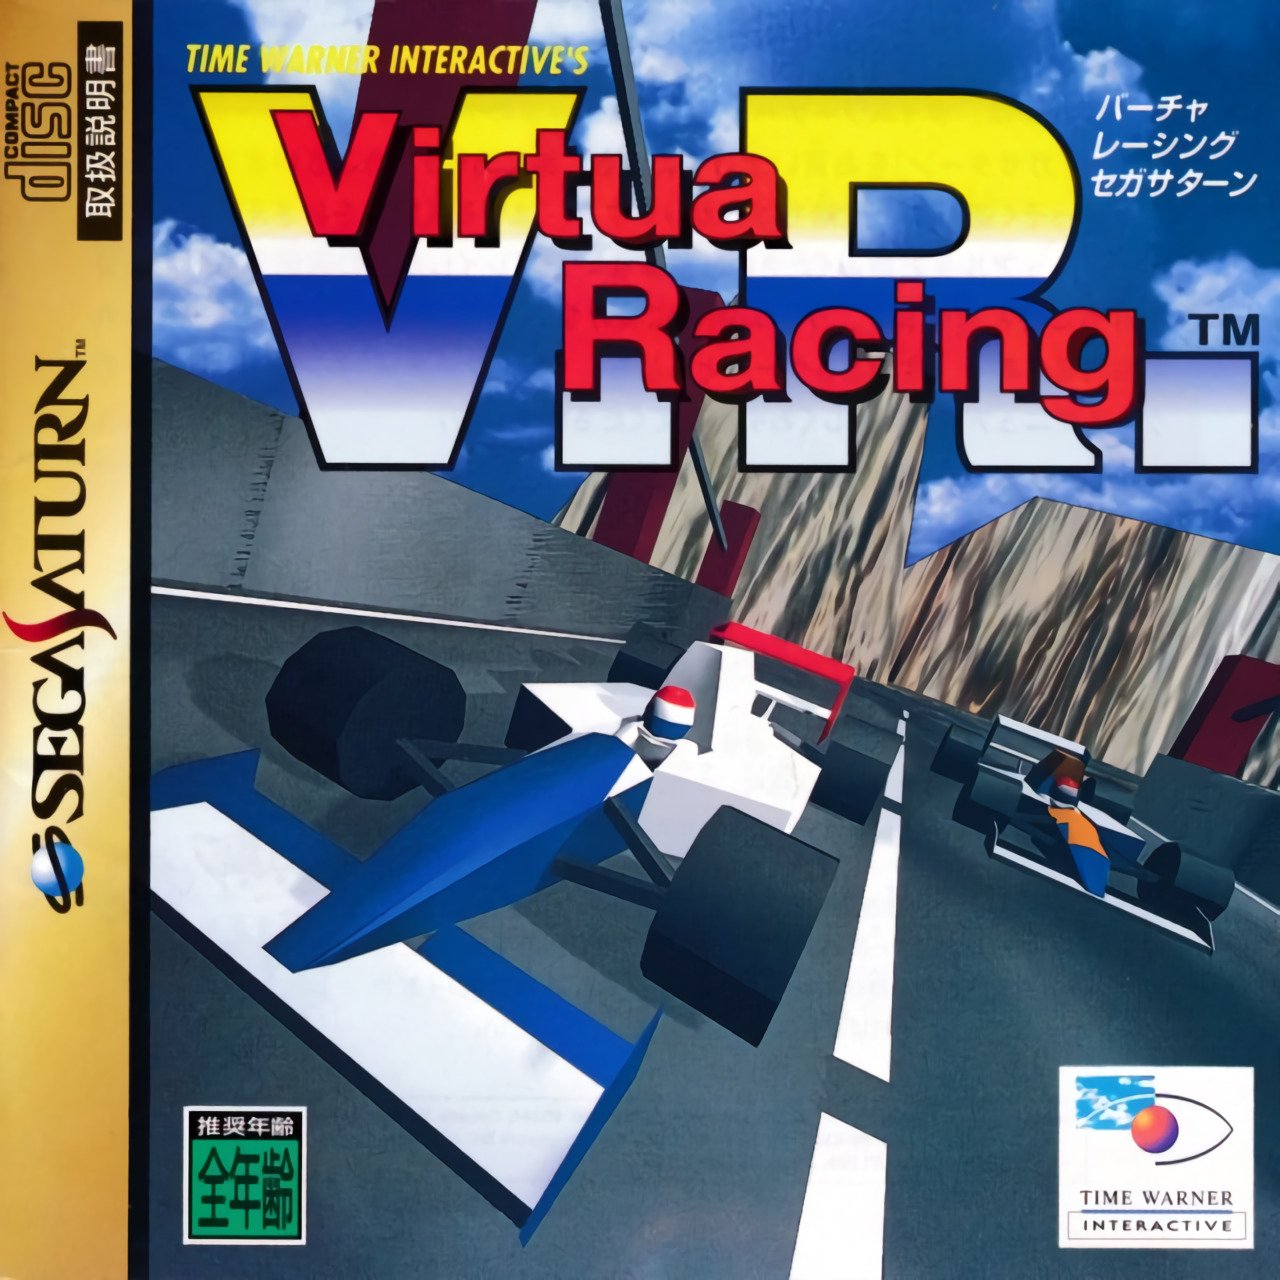 Time Warner Interactive's VR Virtua Racing